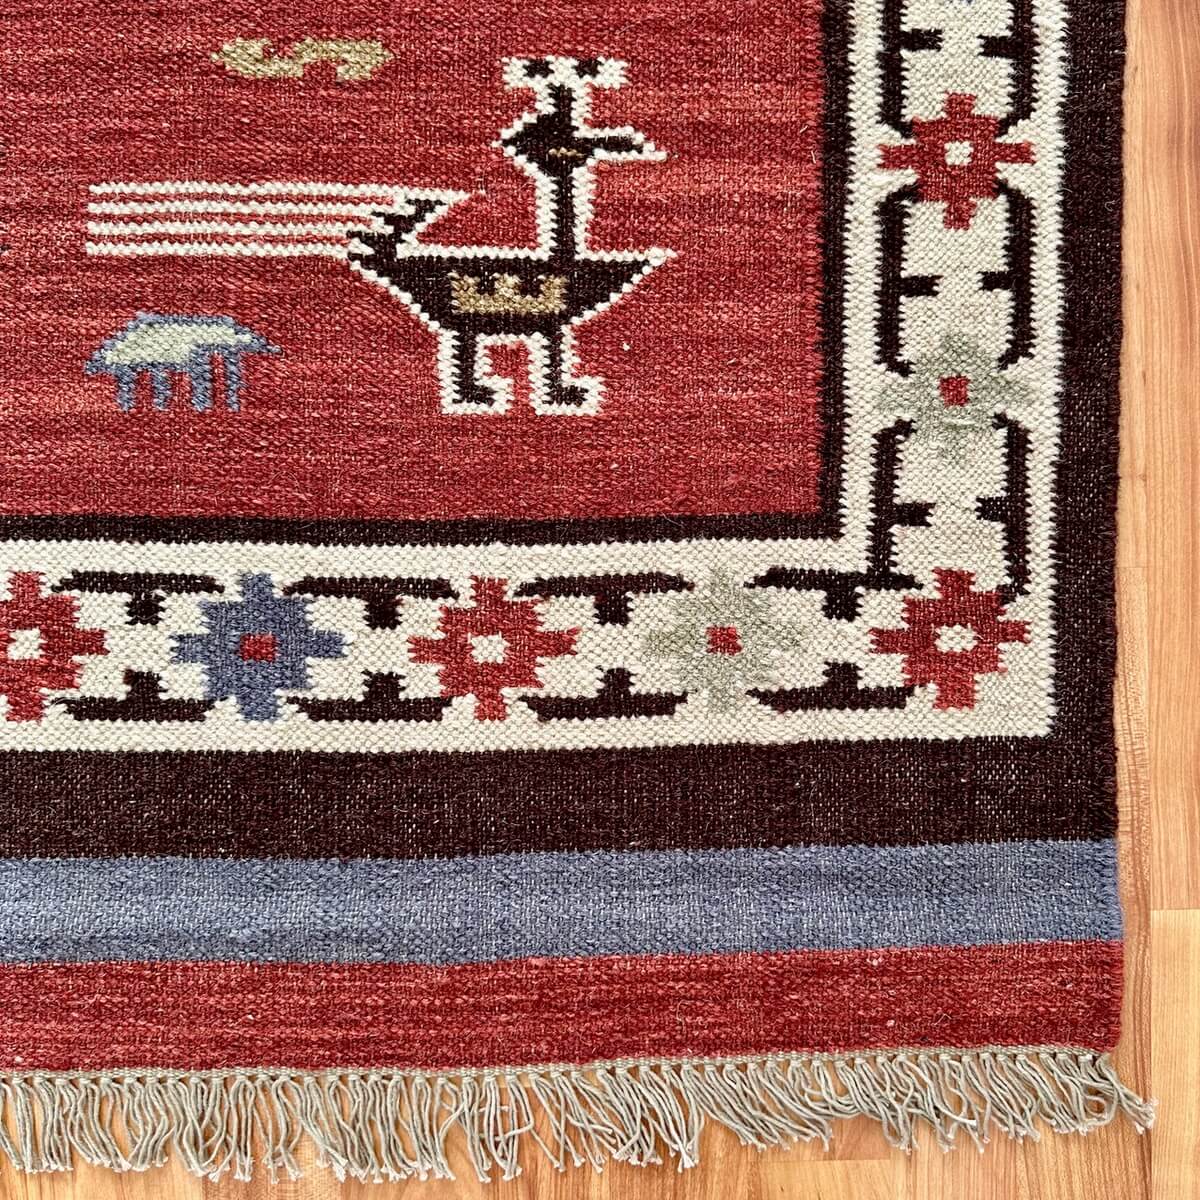 covor traditional kilim realizat din lana birdsong cu modele aztece in nuante calde pamantii, colt